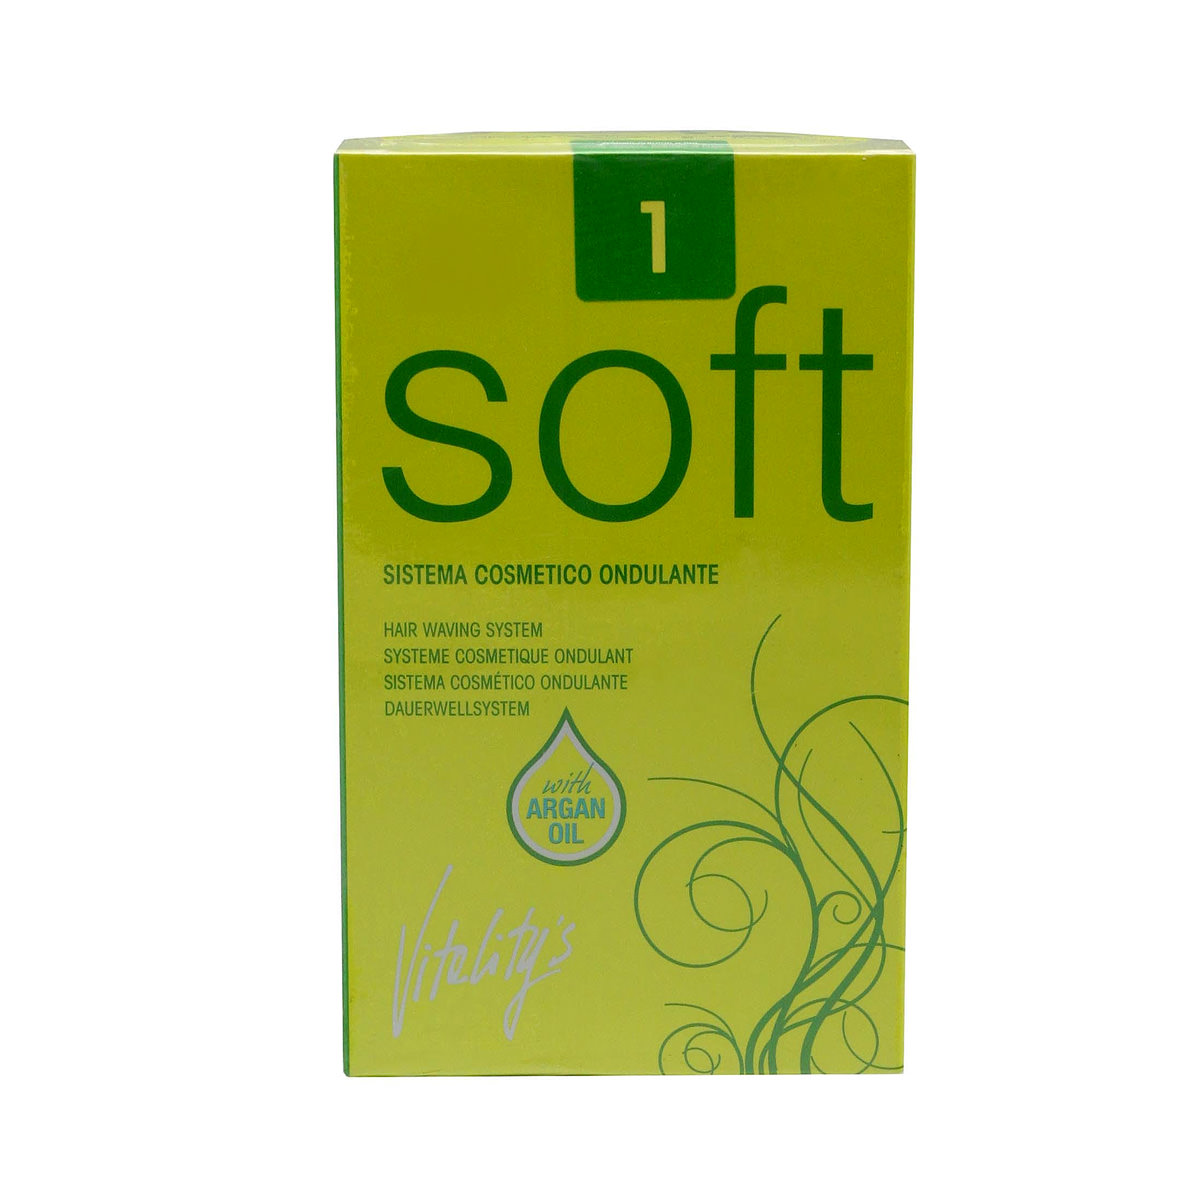 Vitalitys-Soft-Hair-Waving-System-high-sfw(2)